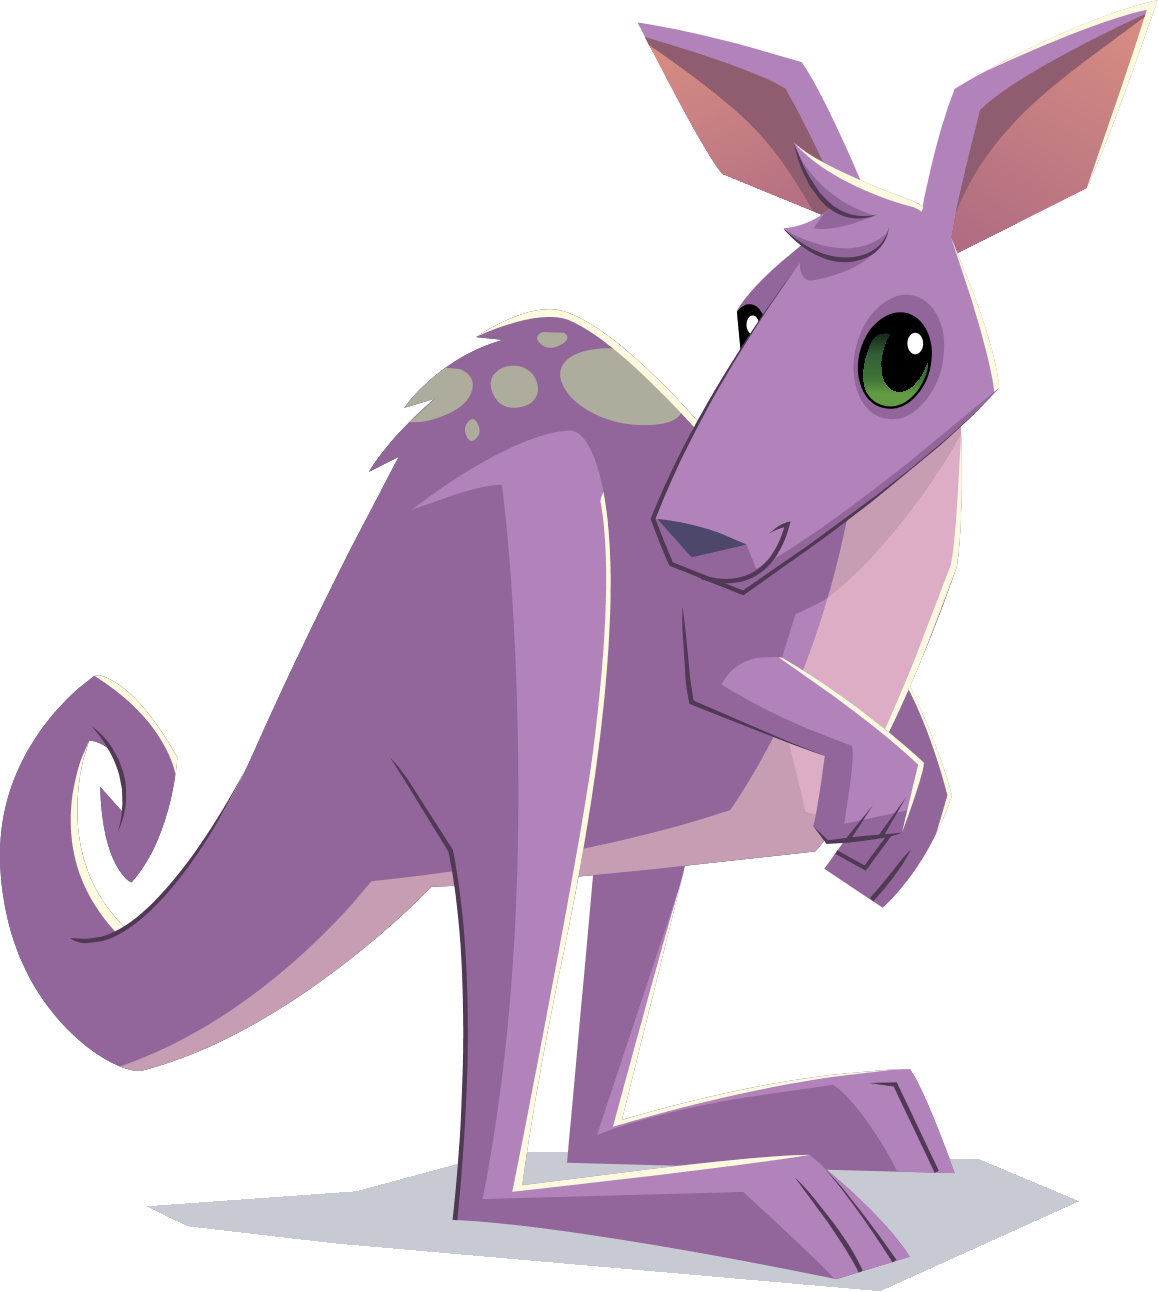 Kangaroo Vector Free Download Image PNG Image